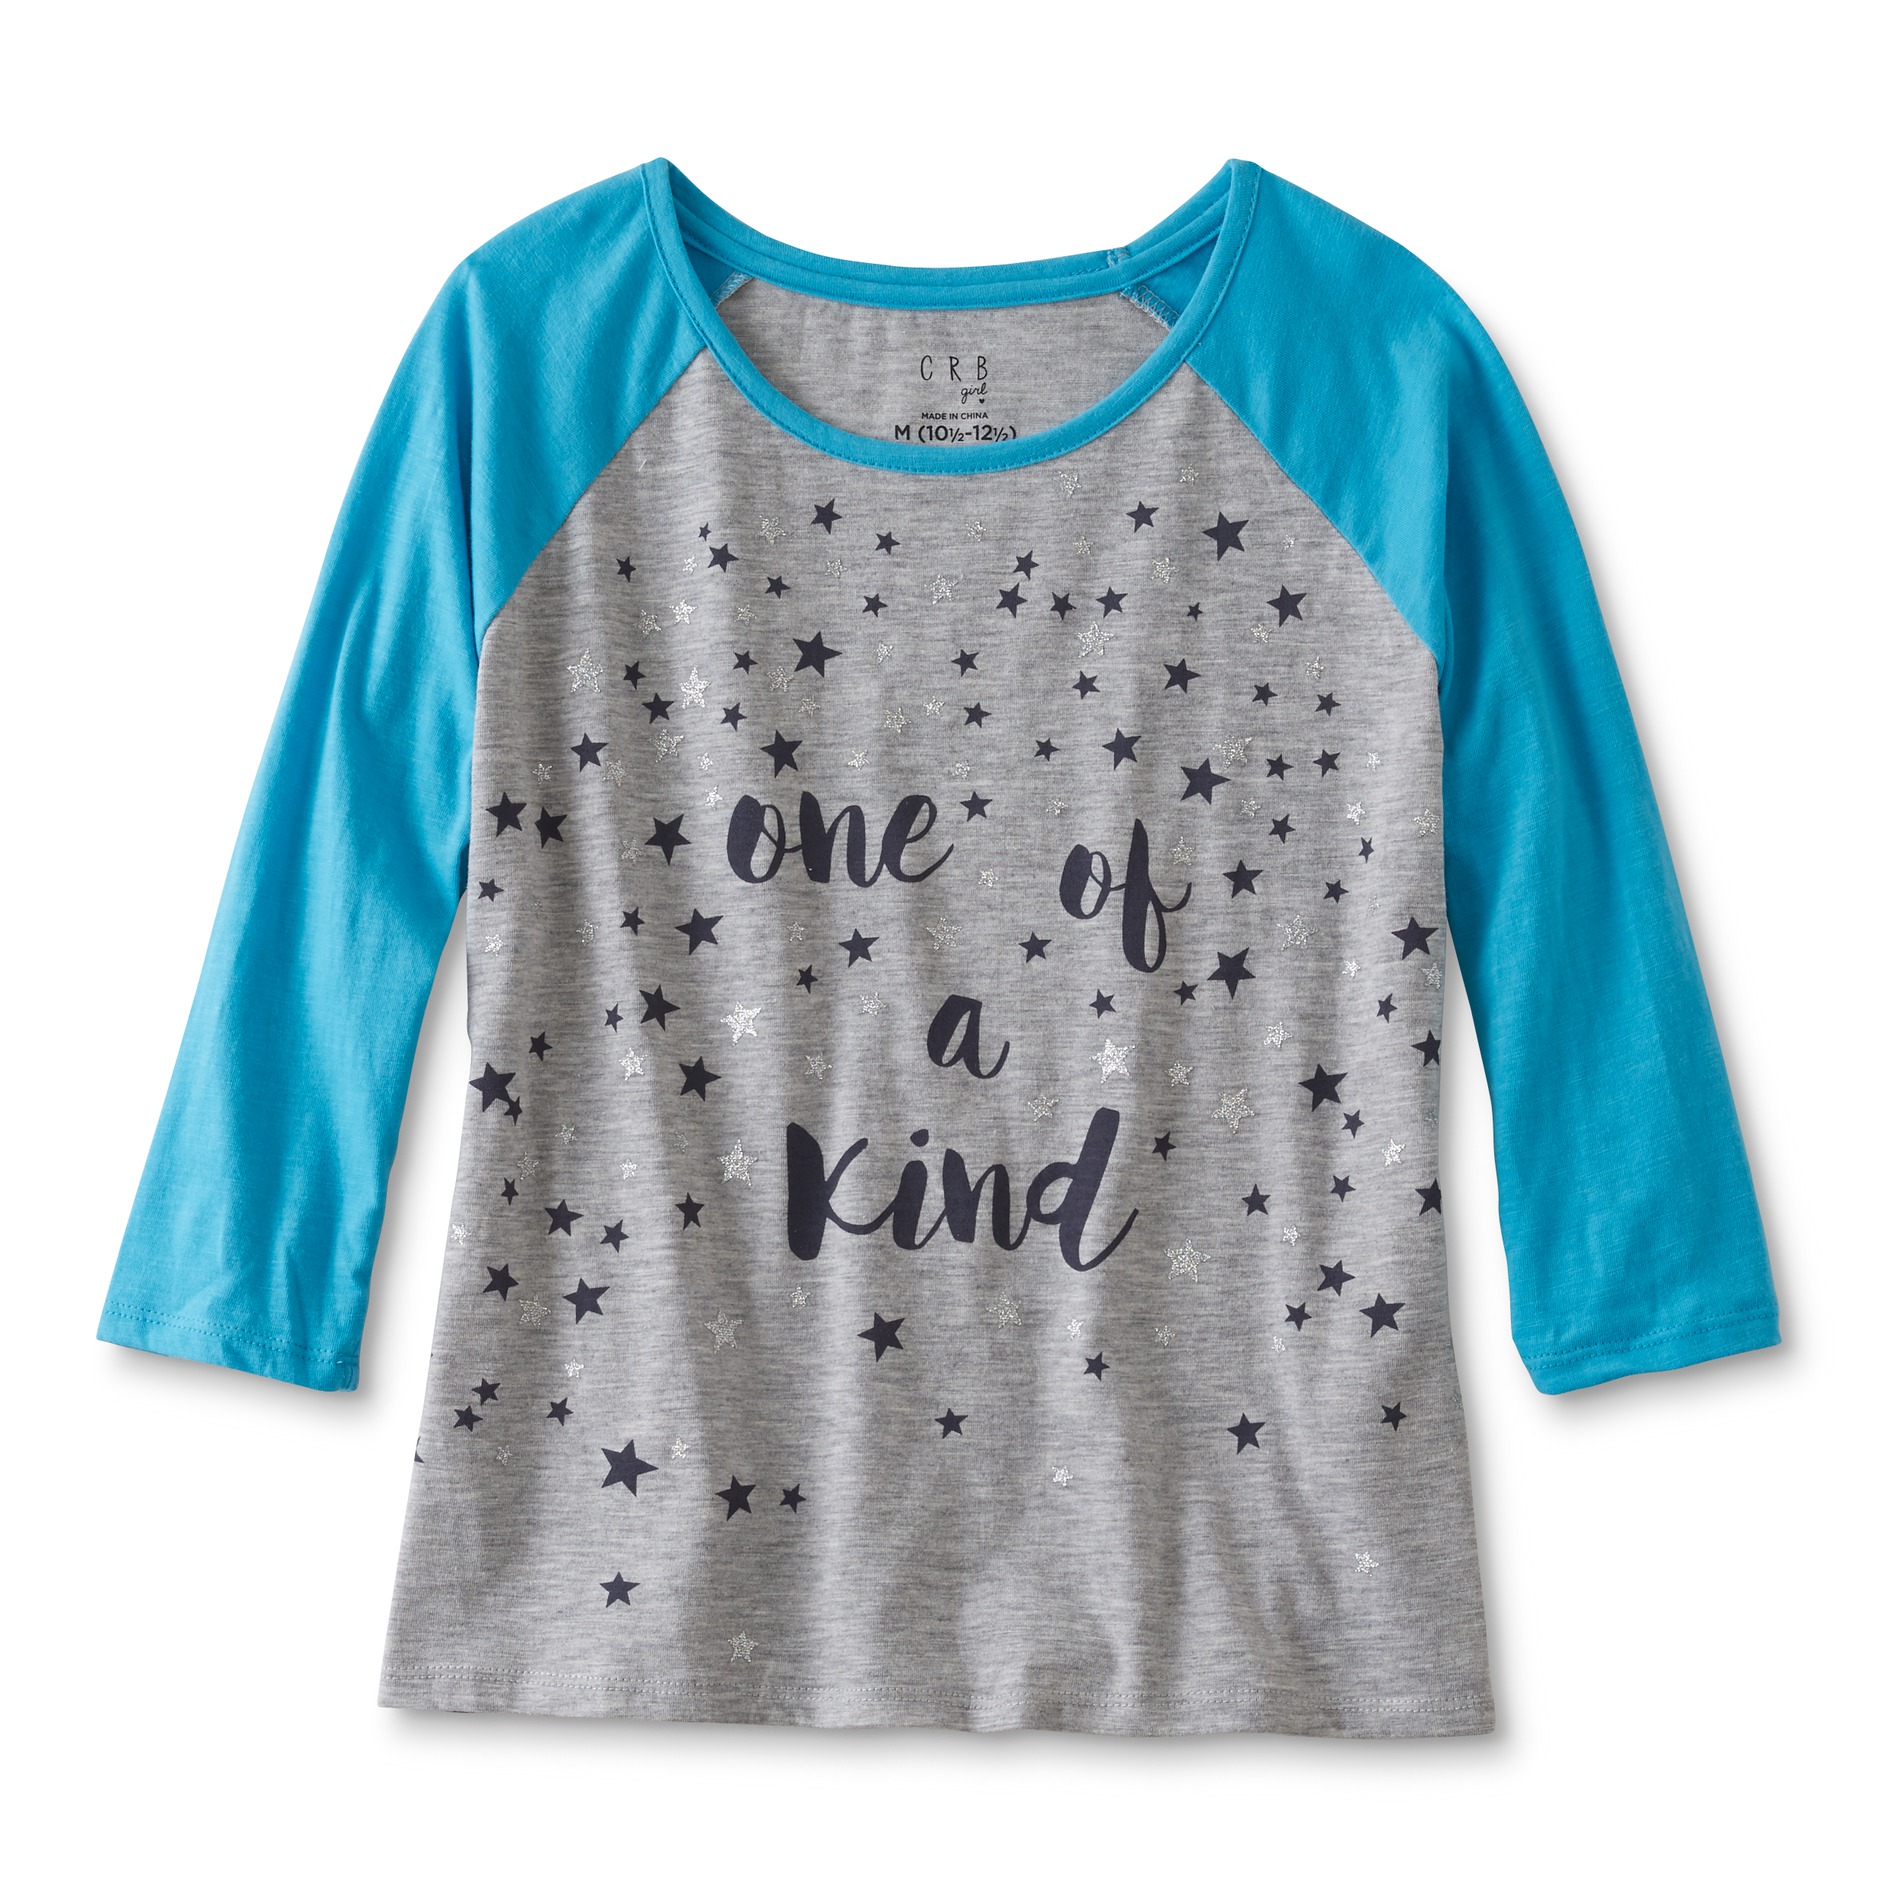 Canyon River Blues Girl's Graphic T-Shirt - Stars